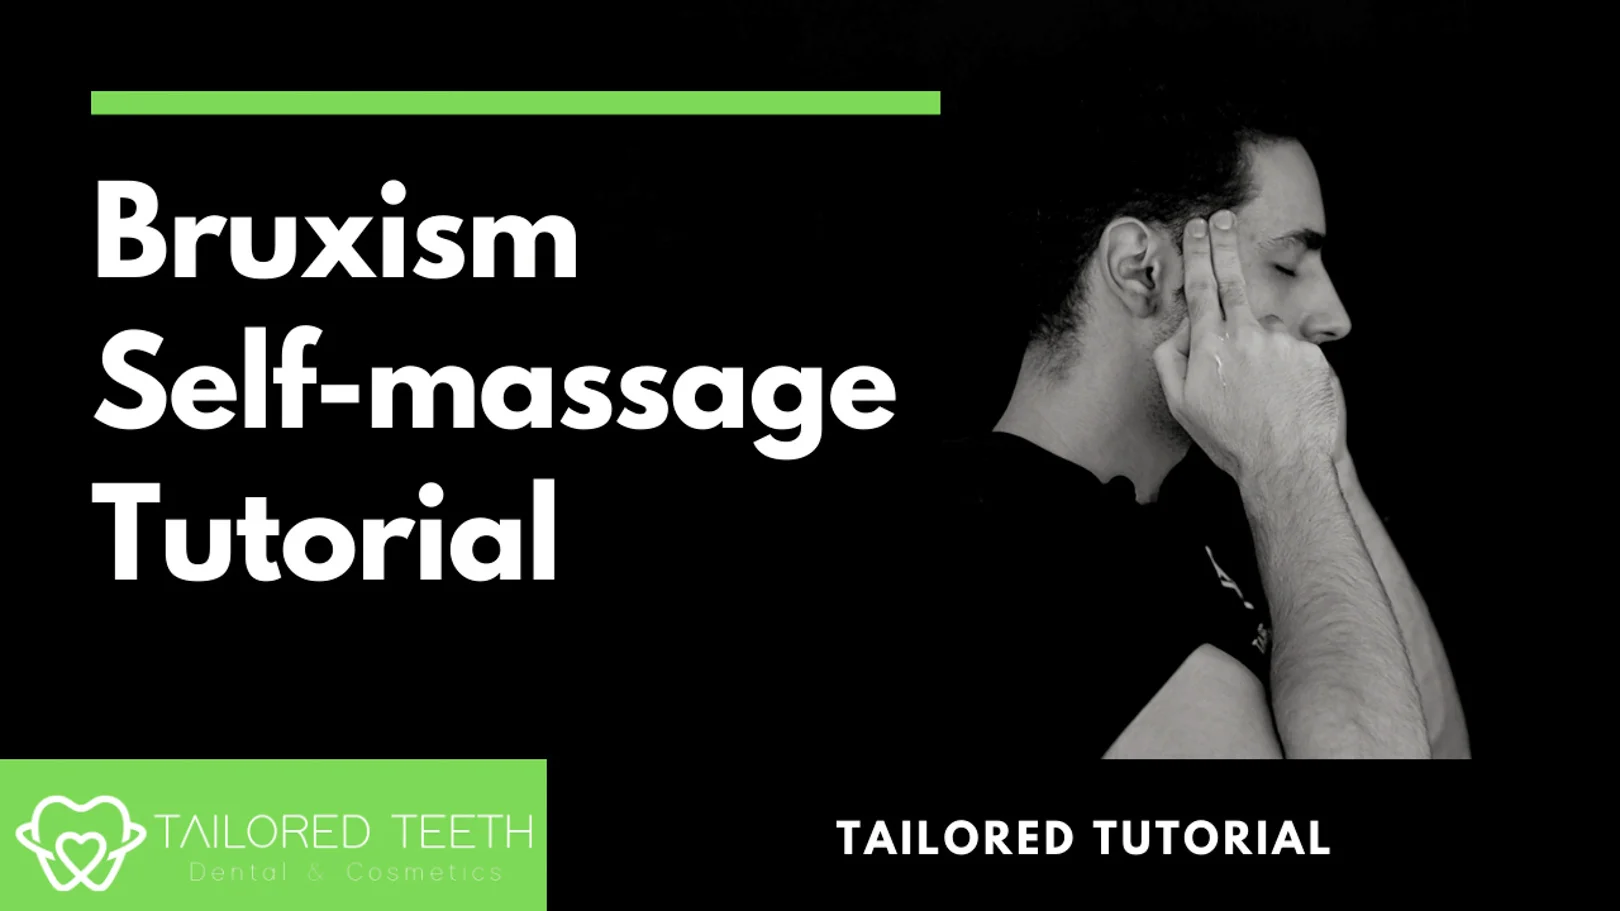 https://tailoredteeth.com.au/wp-content/uploads/2020/05/Bruxism-Self-massage-video.jpg.webp